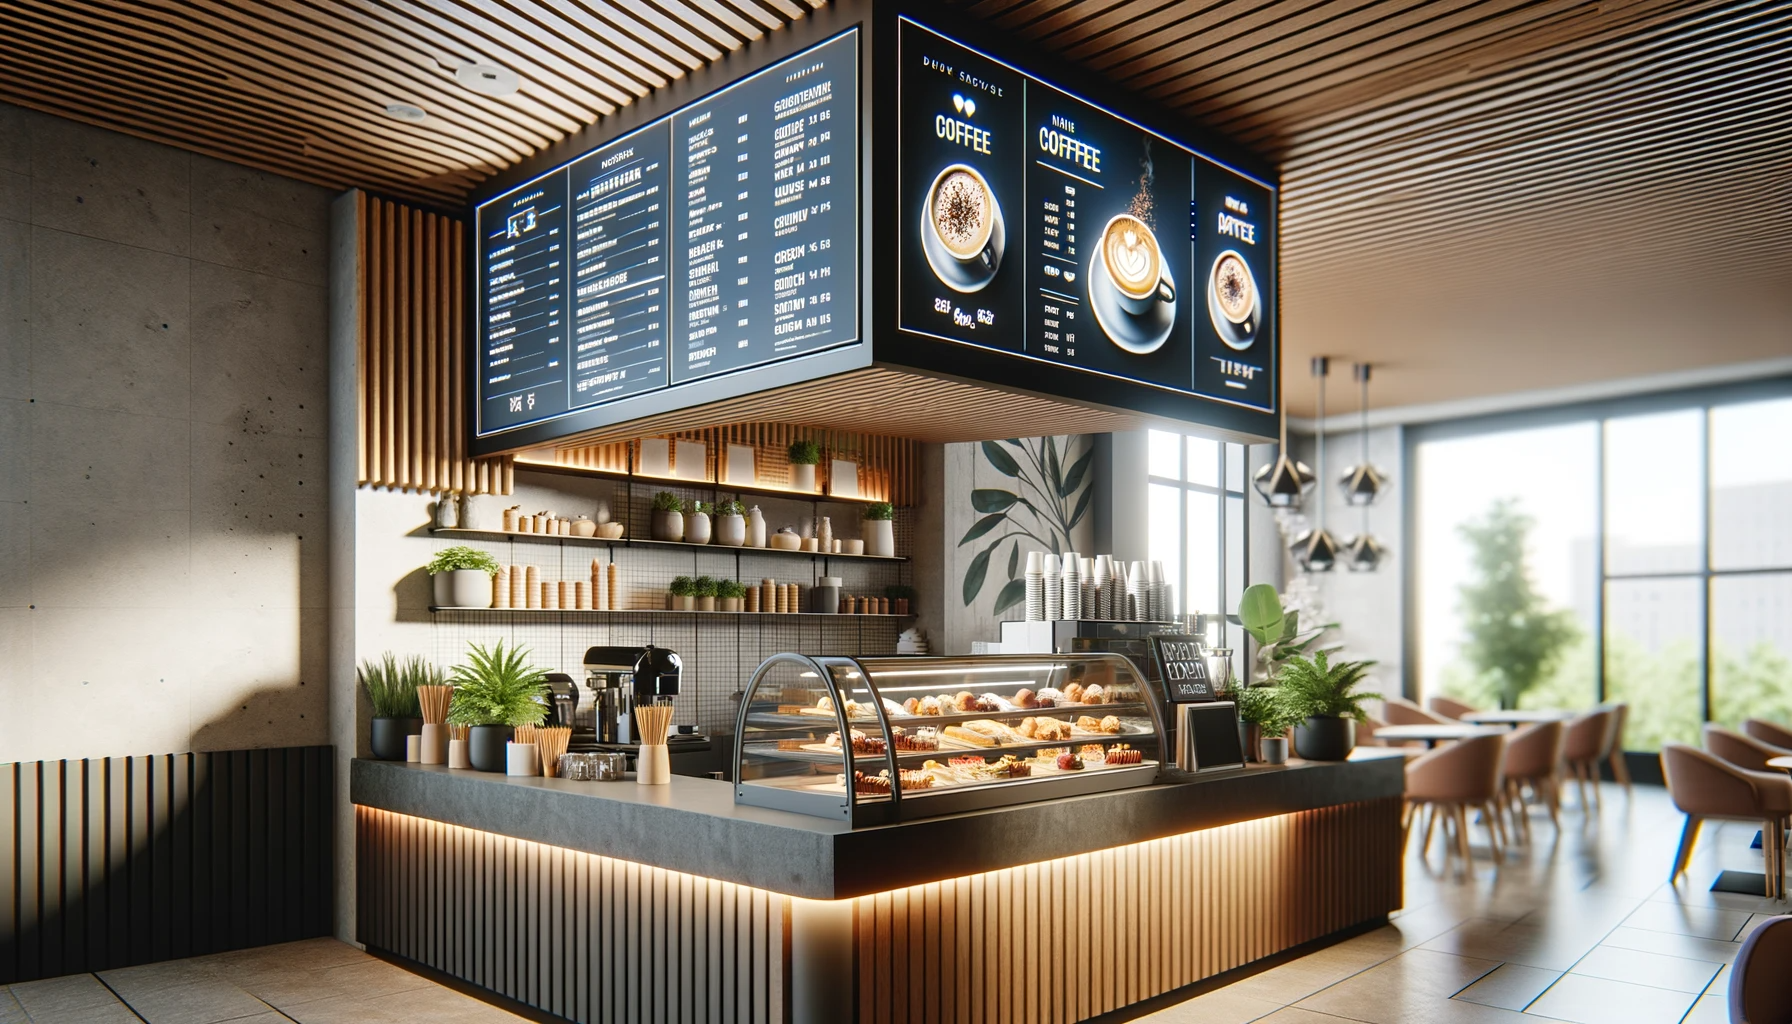 Vibrant restaurant interior with an eye-catching digital menu.